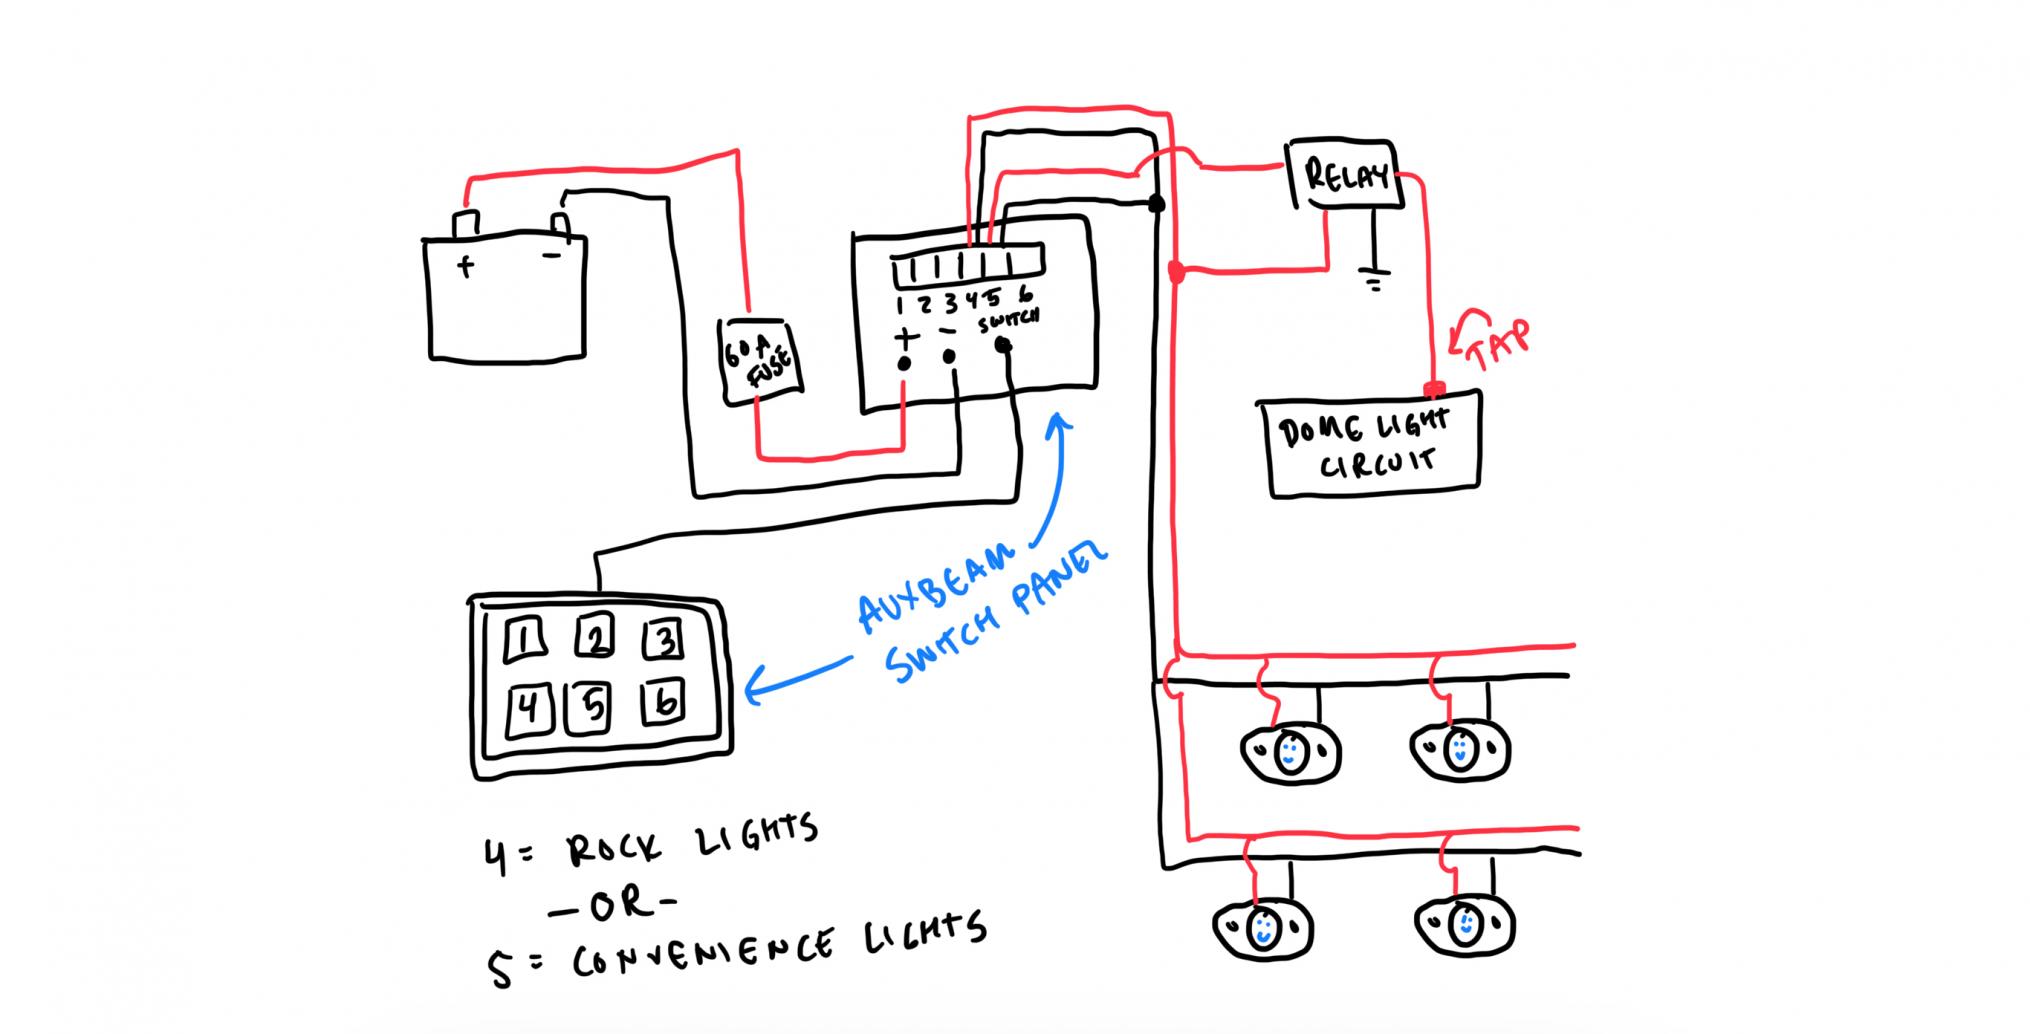 Rock light and convenience light wiring diagram help-img_0067-jpg